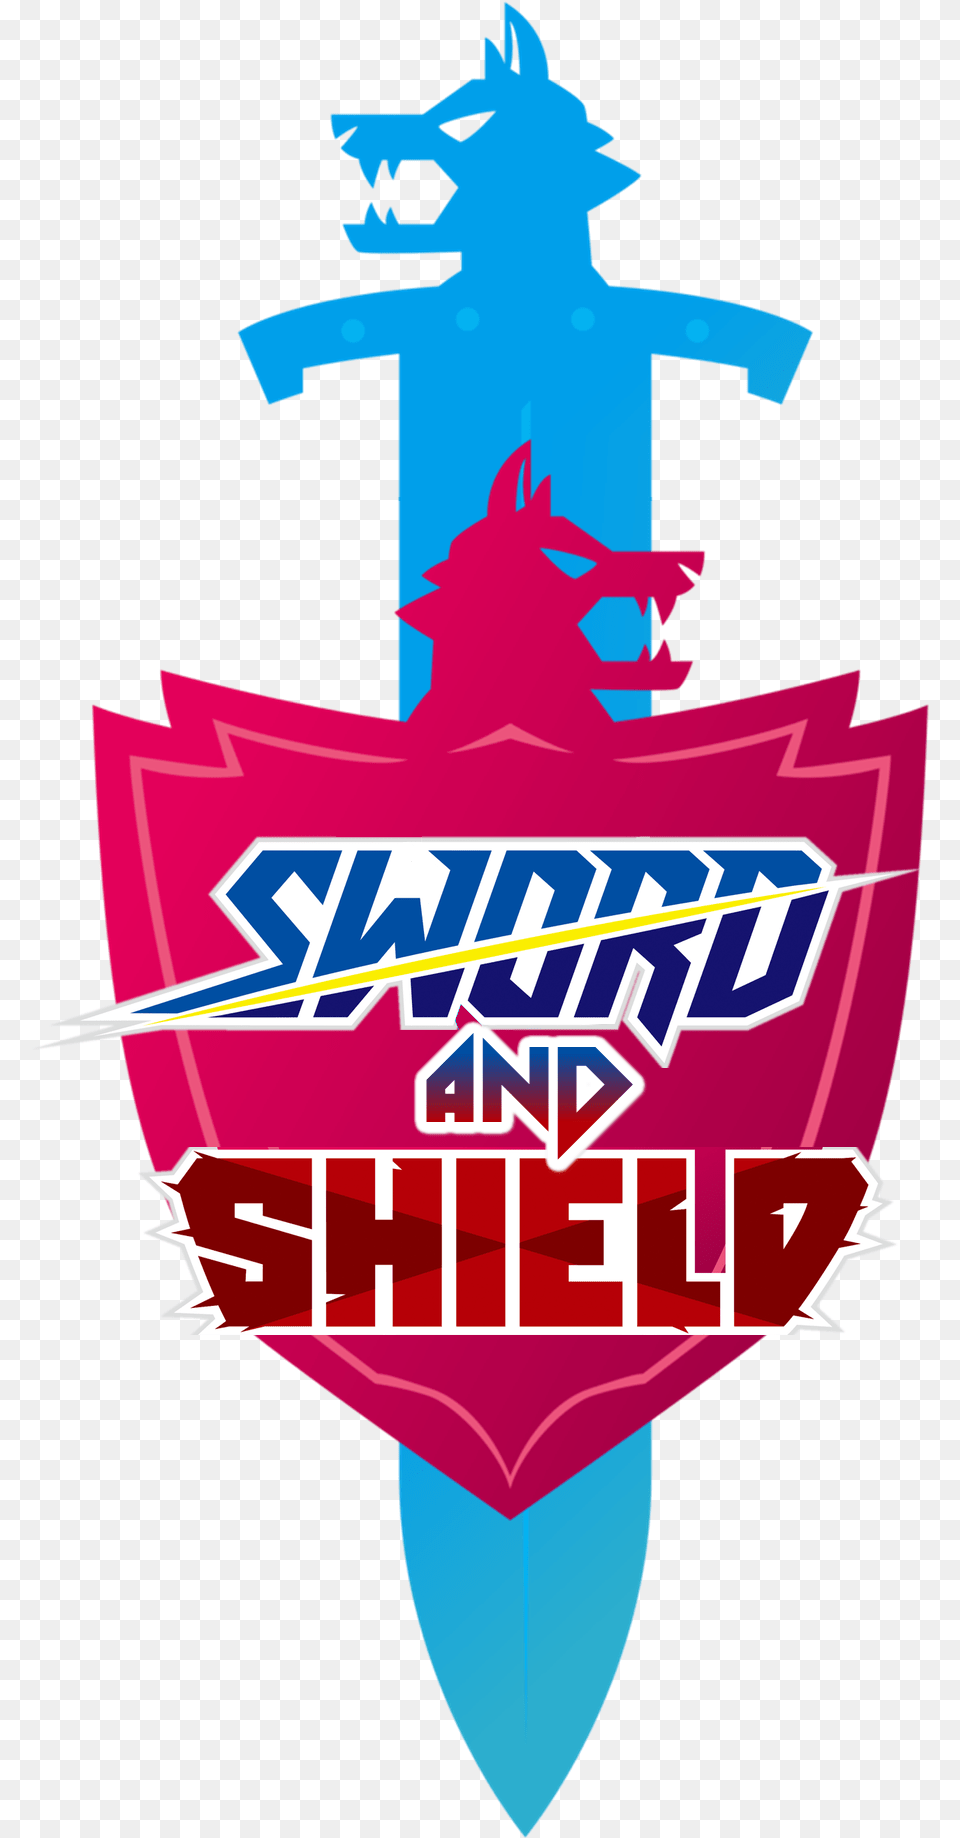 Pokemon Sword And Shield In One Logo Pokemon Sword And Shield Logos, Badge, Symbol, Emblem, Dynamite Free Png